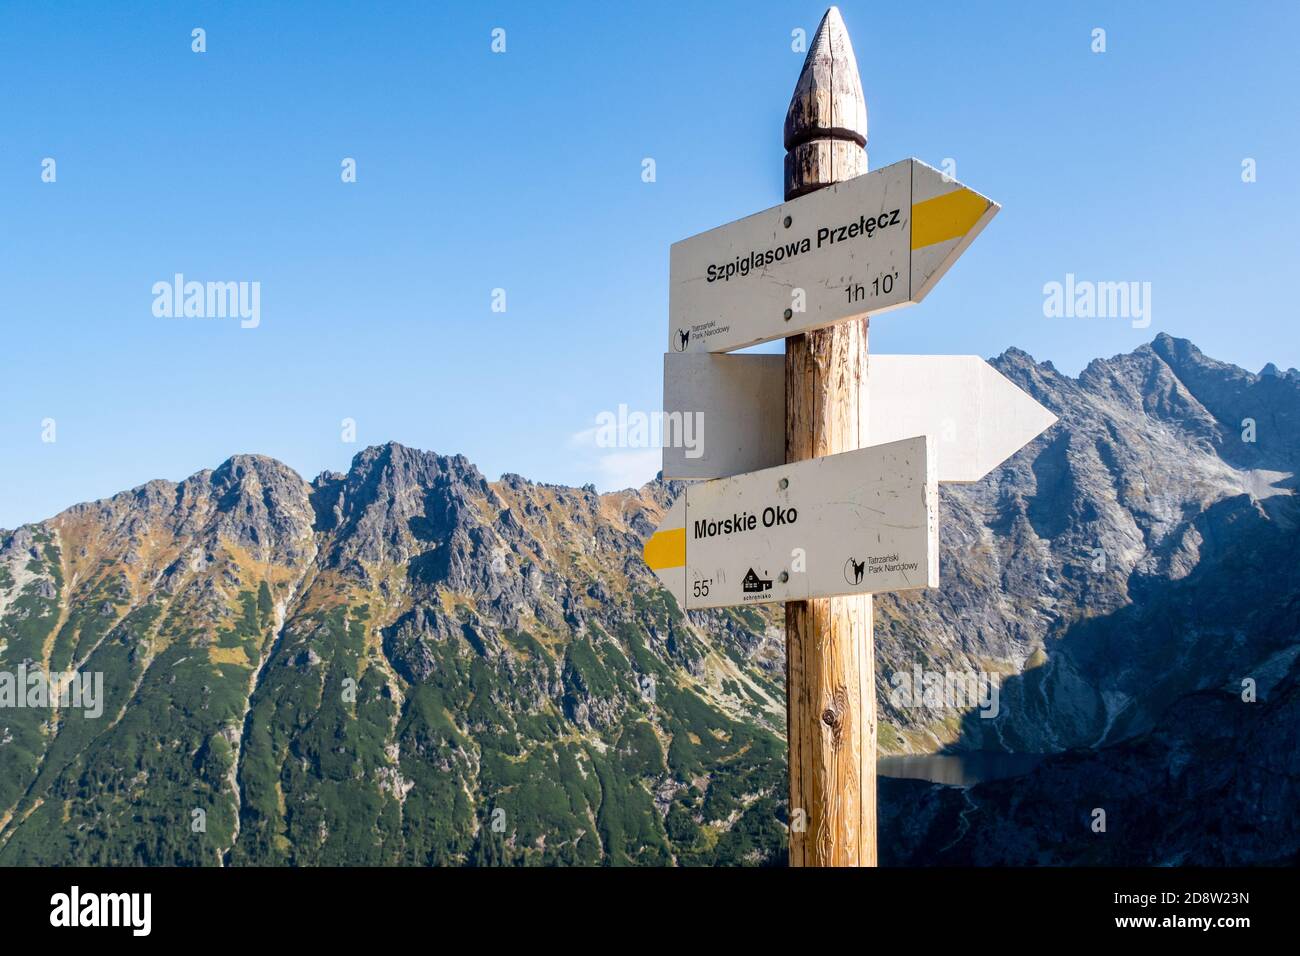 Mountain trail wooden directional sign in Tatra Mountains, pointing direction to Morskie Oko lake (Eye of the Sea) and Szpiglasowa Przelecz Pass. Stock Photo